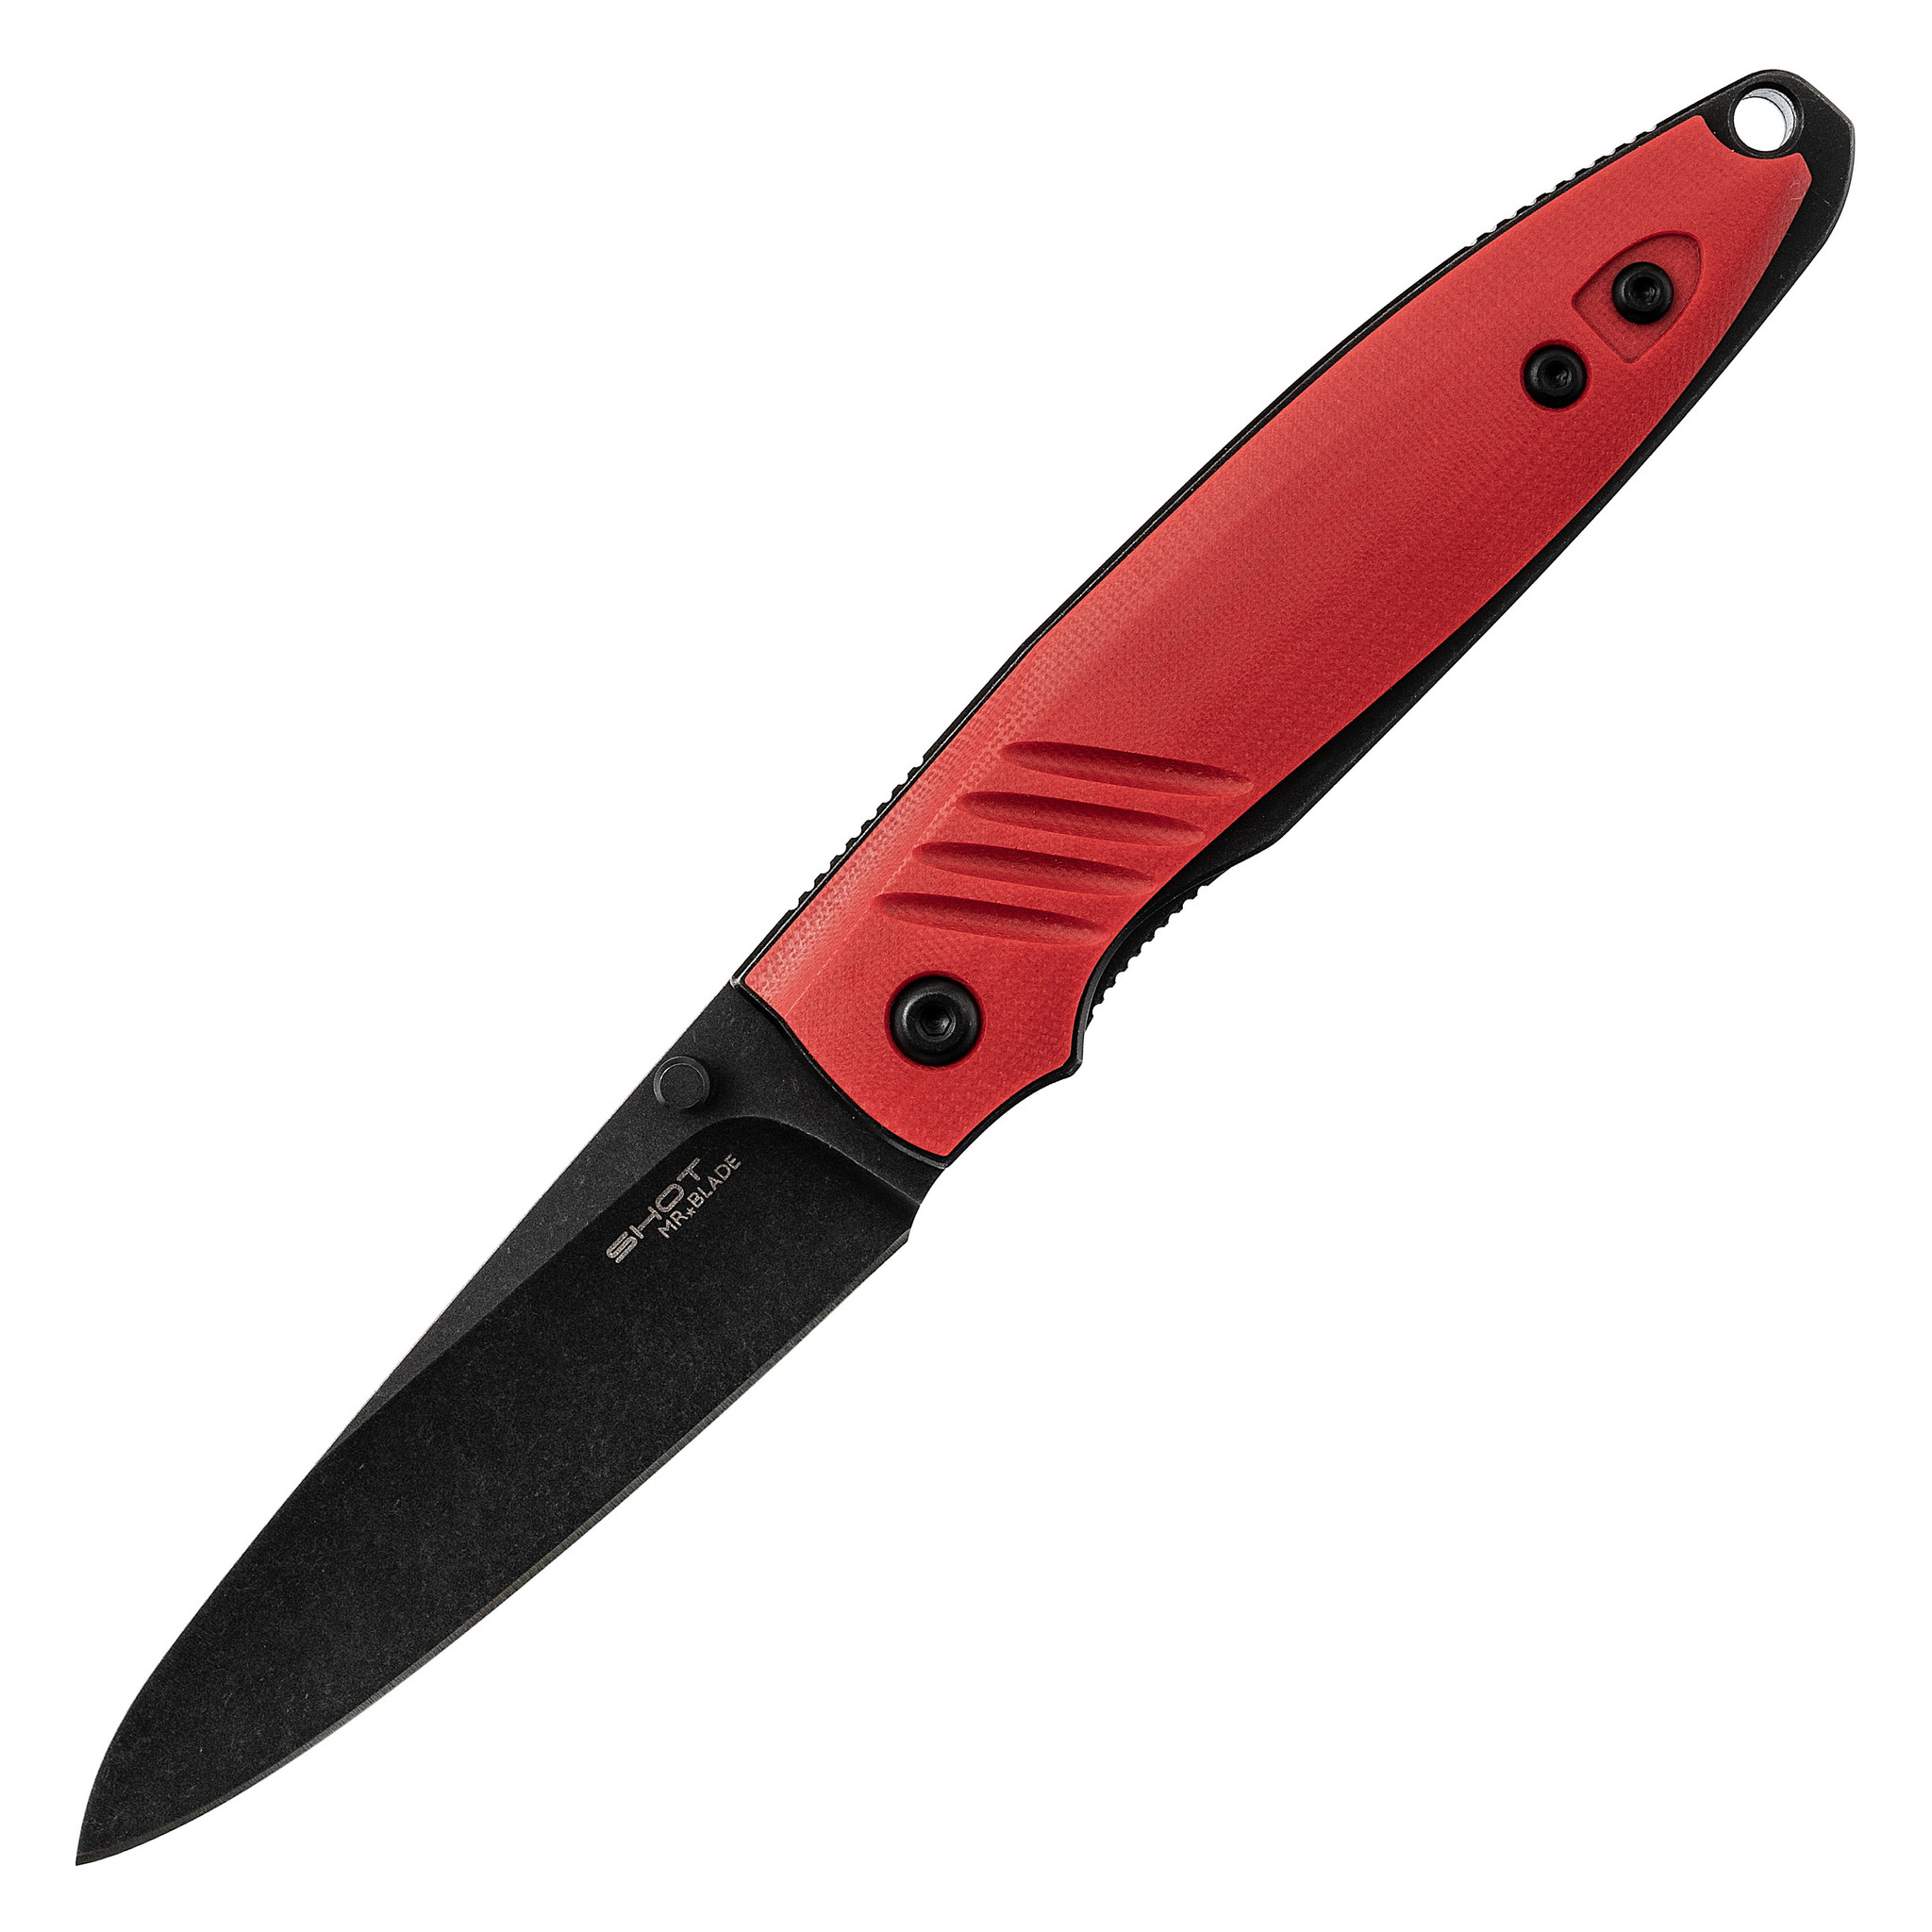 Складной нож Shot Blackwash Red, Mr.Blade складной нож ontario joe pardue utilitac ii   tanto blade highly textured handle